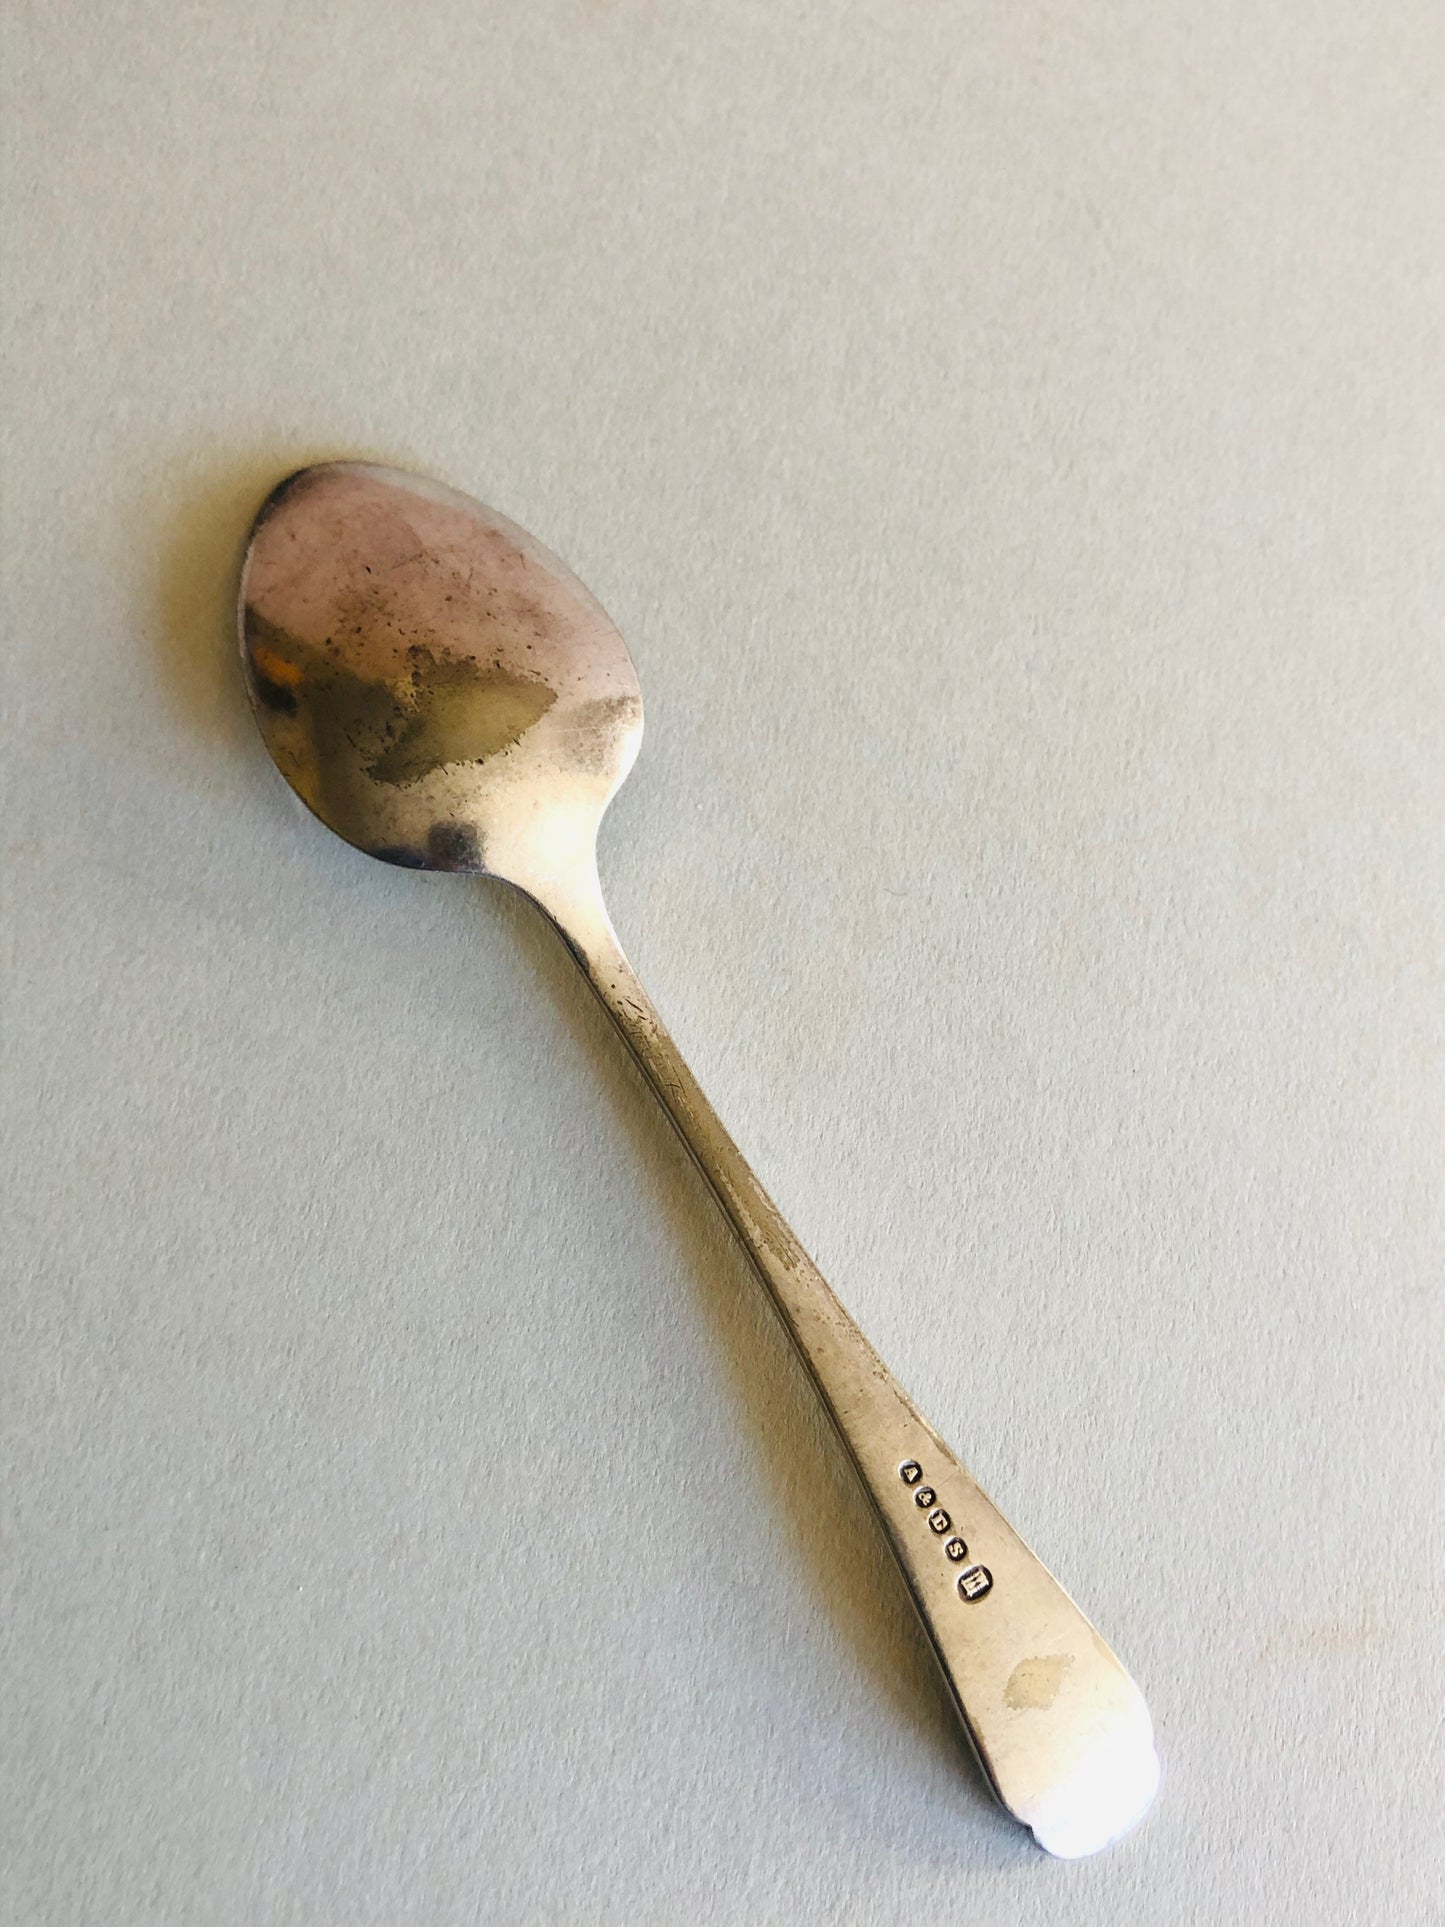 The Headhunter Carolyn - Antique Engraved Dessert / Soup Spoon